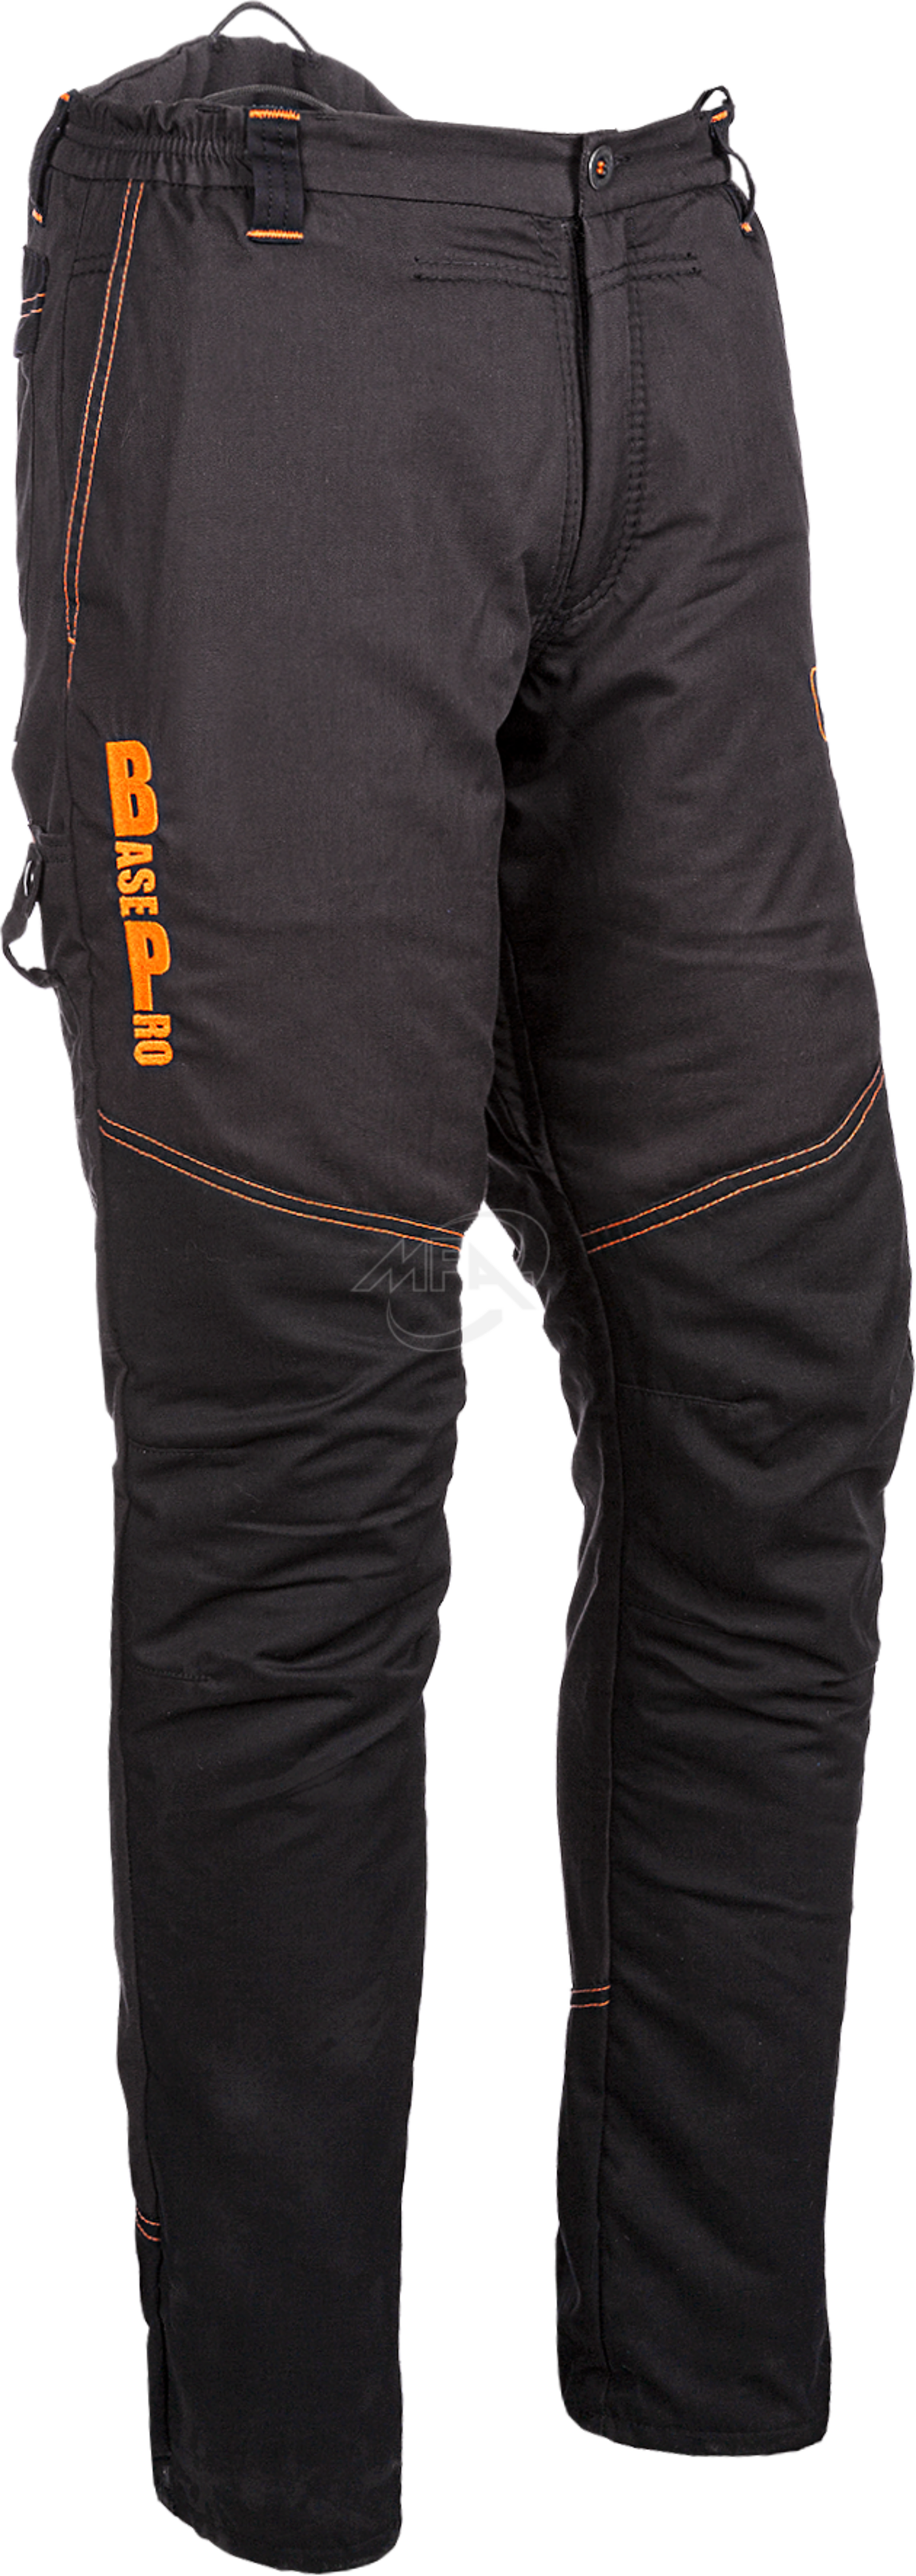 Pantalon de protection Perthus classe 1 SIP gamme BasePro